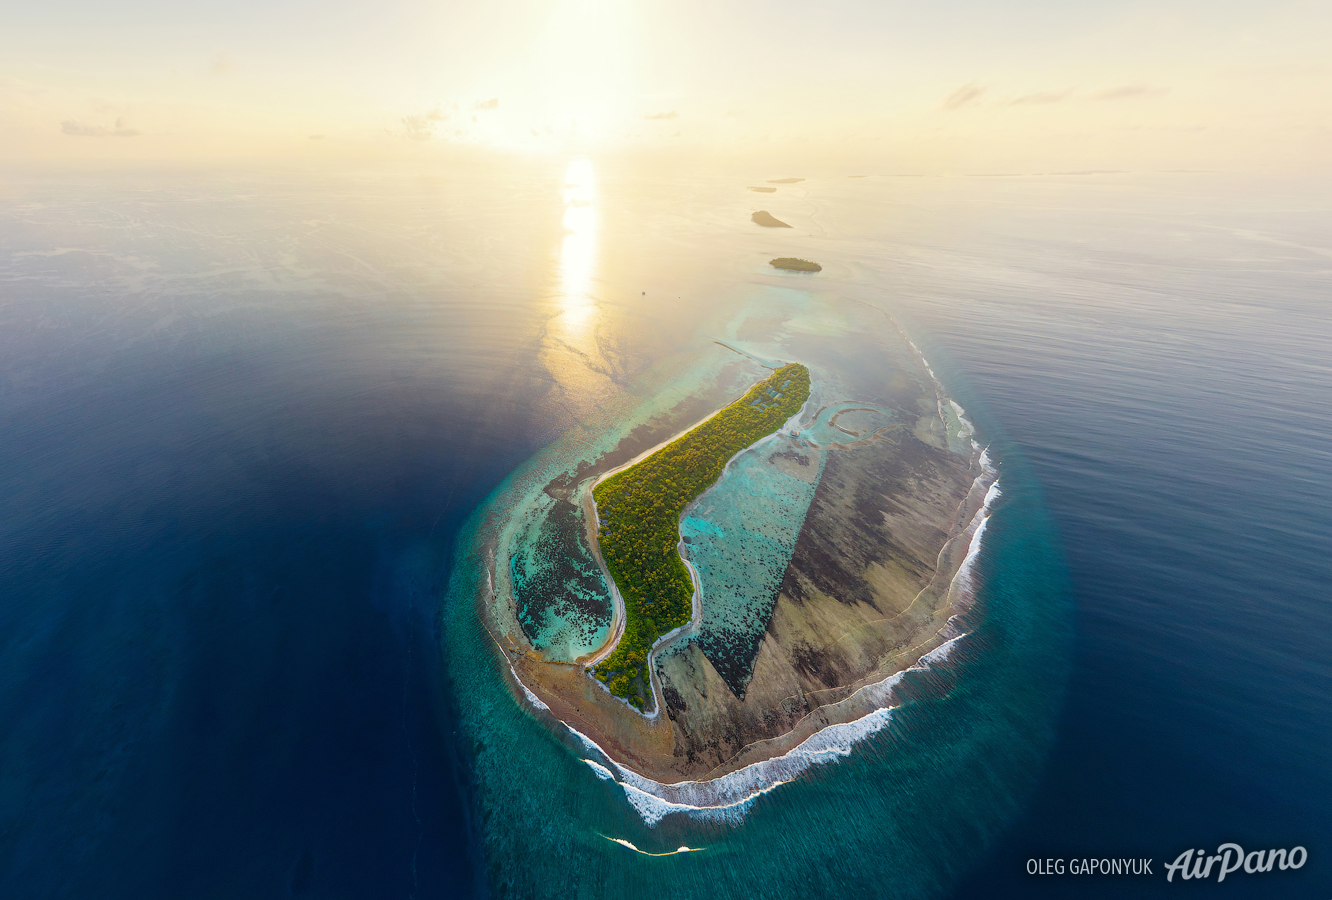 Shape island. Атолла Южный Мале (Каафу). Каафу (Северный Мале) Атолл. Каафу Атолл Мальдивы. Мальдивы Южный Каафу Атол.